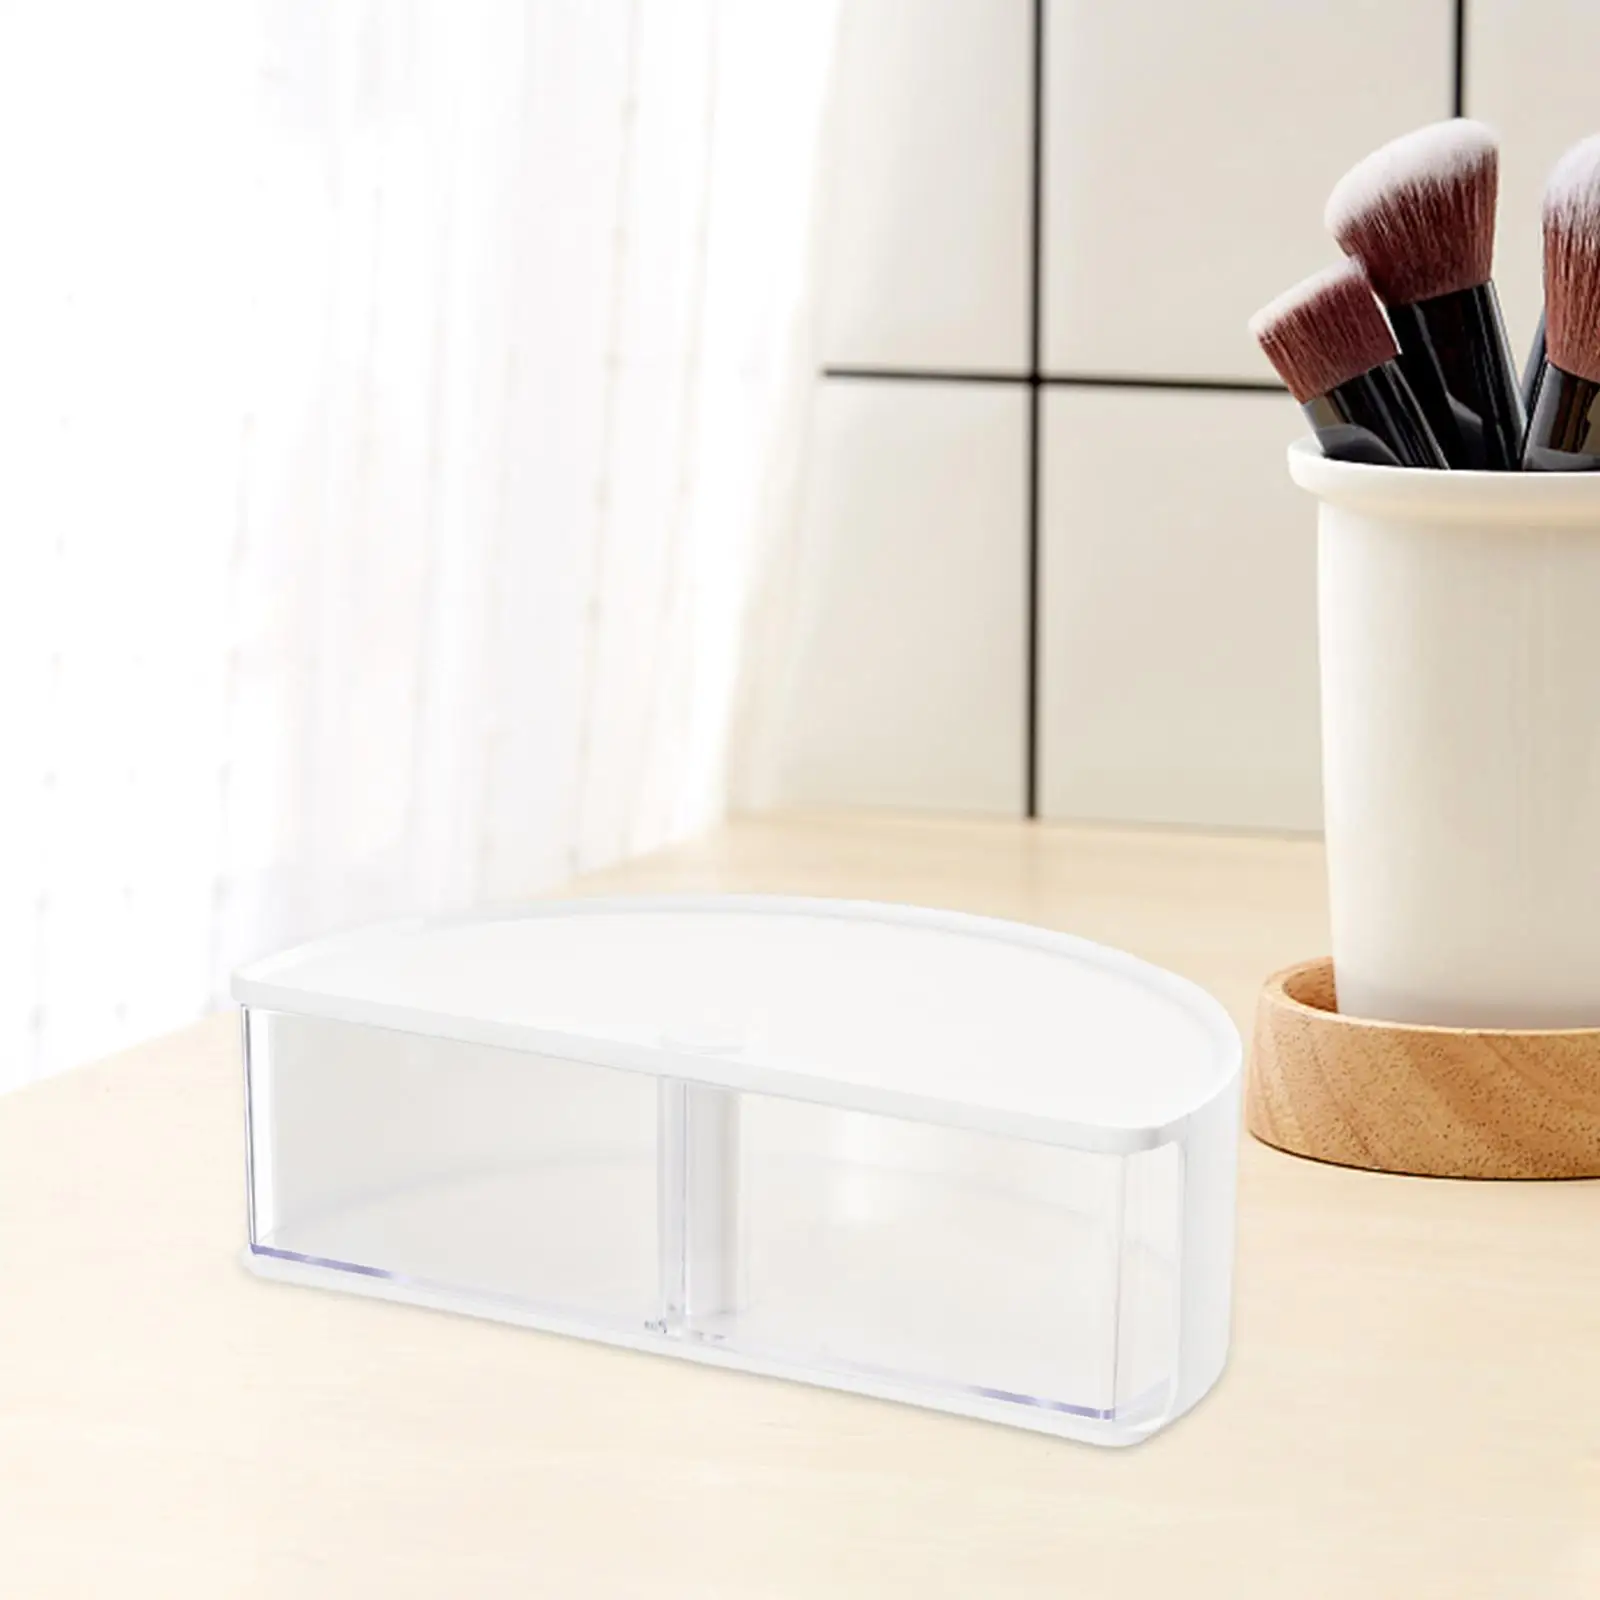 Makeup Organizer Large Capacity Multifunctional Skincare Holder Cosmetic Display Case for Desk Bedroom Counter Bathroom Dresser